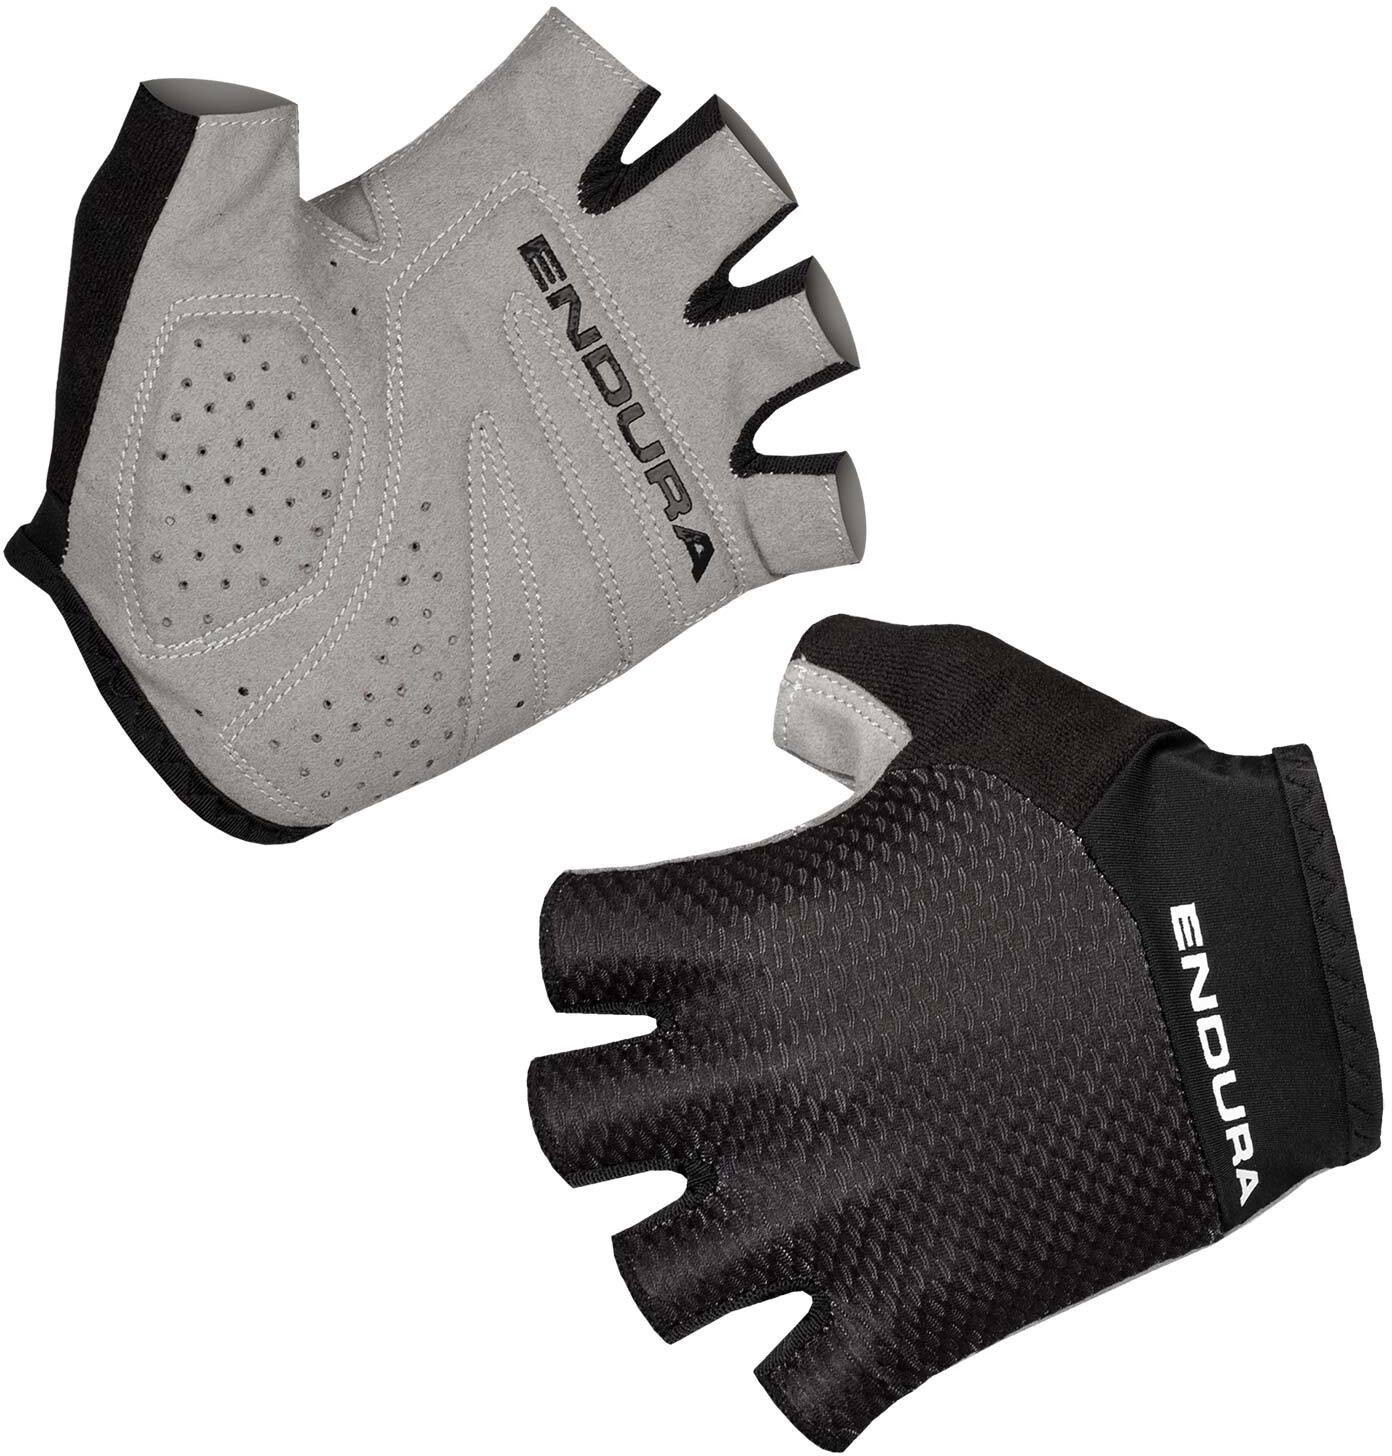 Endura Xtract Lite Gloves Men's black ab 22,75 € | Preisvergleich bei